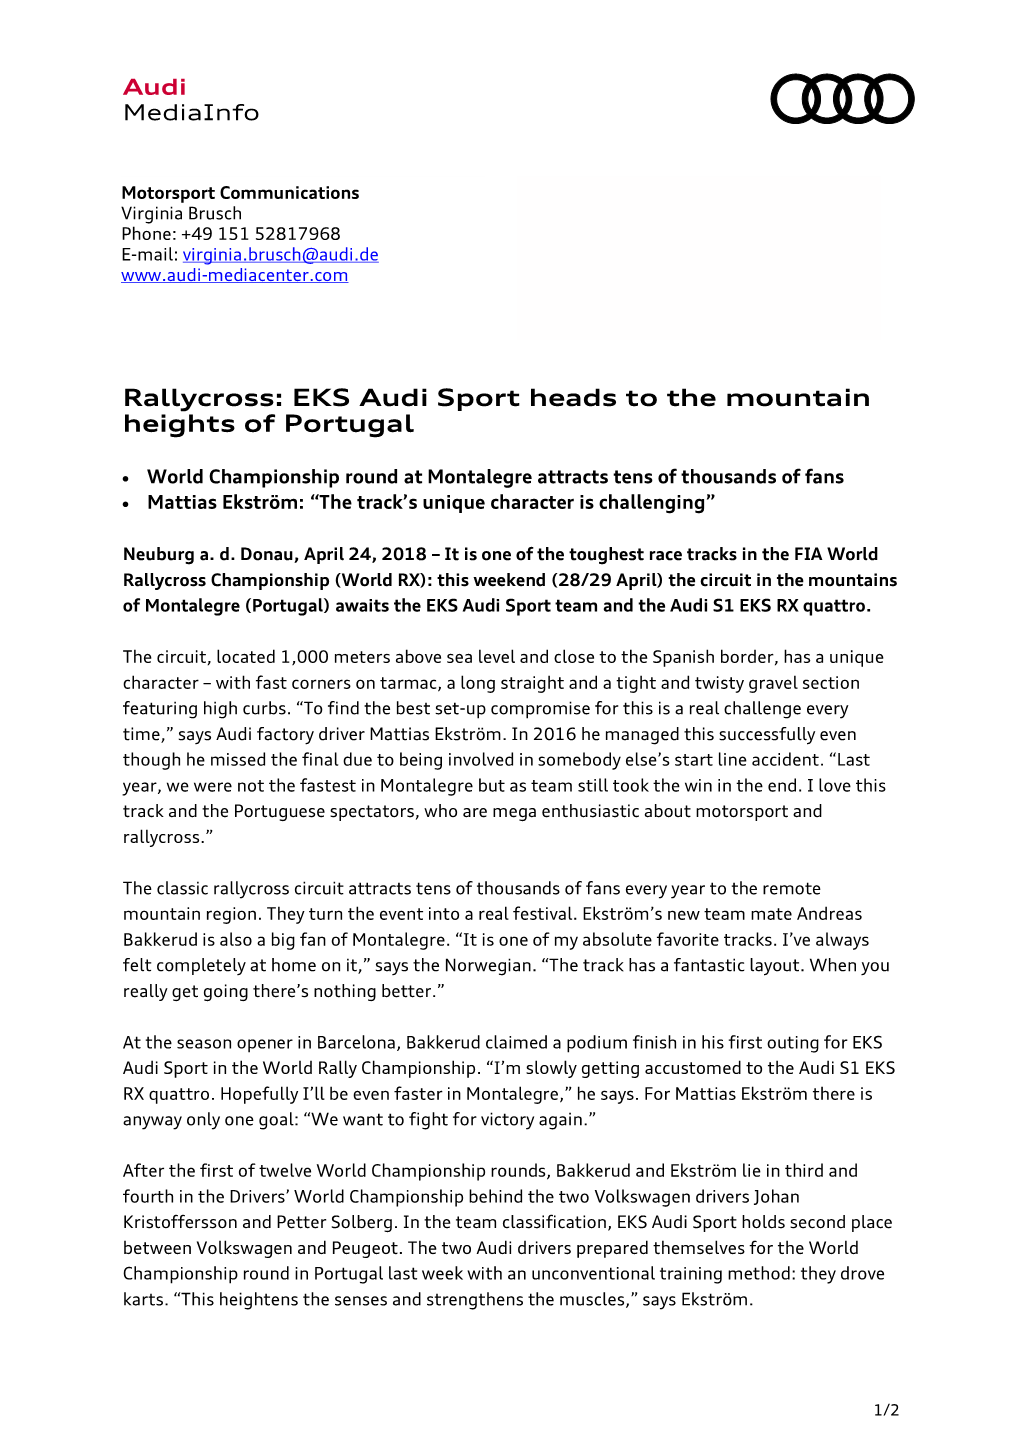 Rallycross: EKS Audi Sport Heads to the Mountain Heights of Portugal